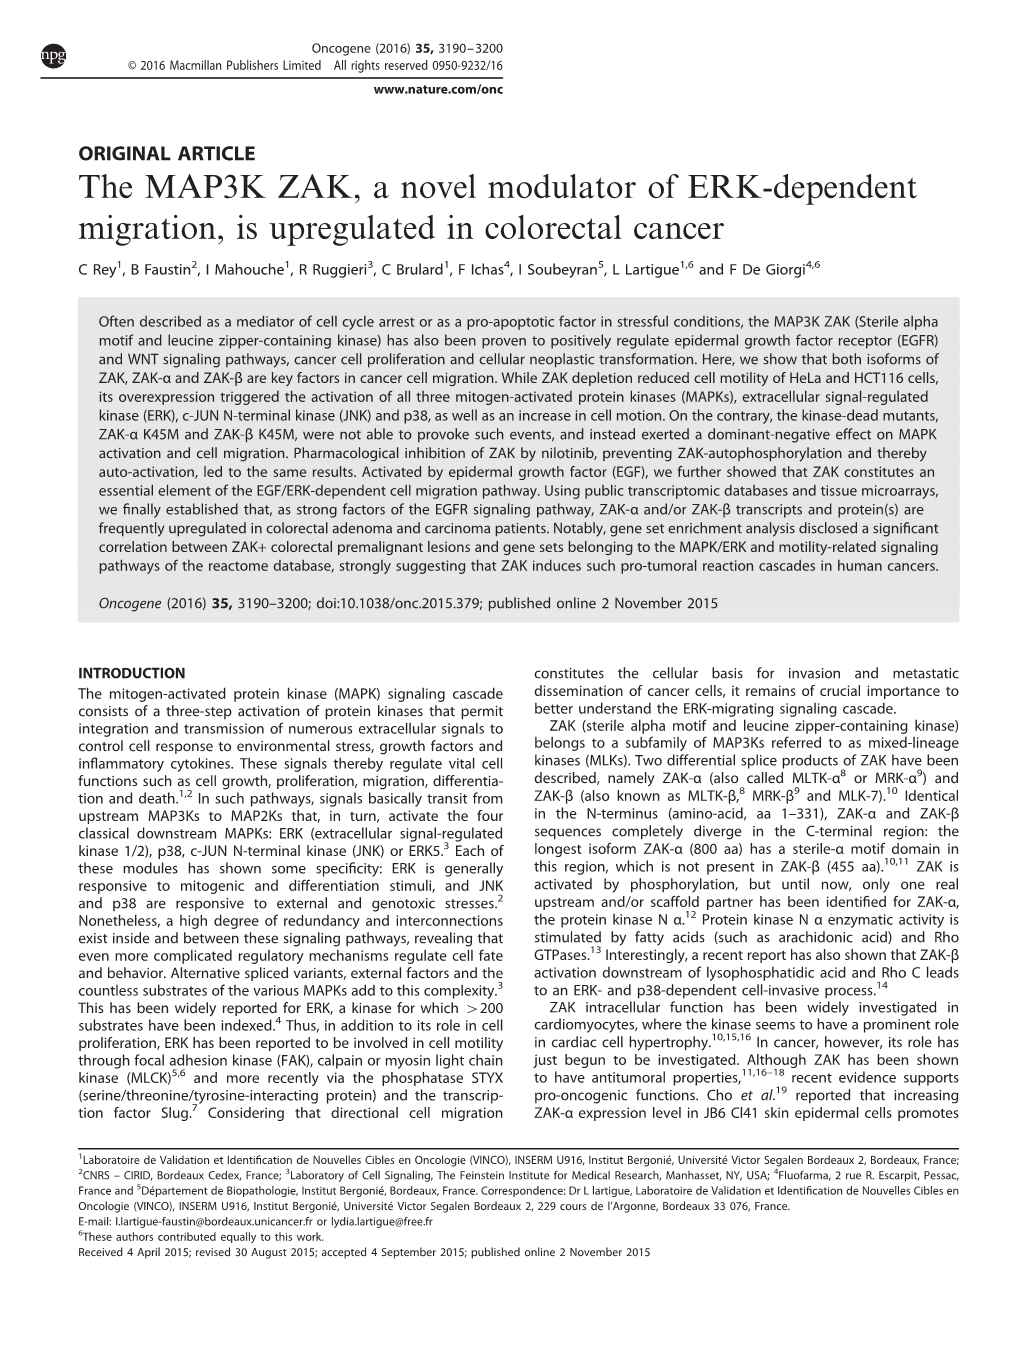 The MAP3K ZAK, a Novel Modulator of ERK-Dependent Migration, Is Upregulated in Colorectal Cancer